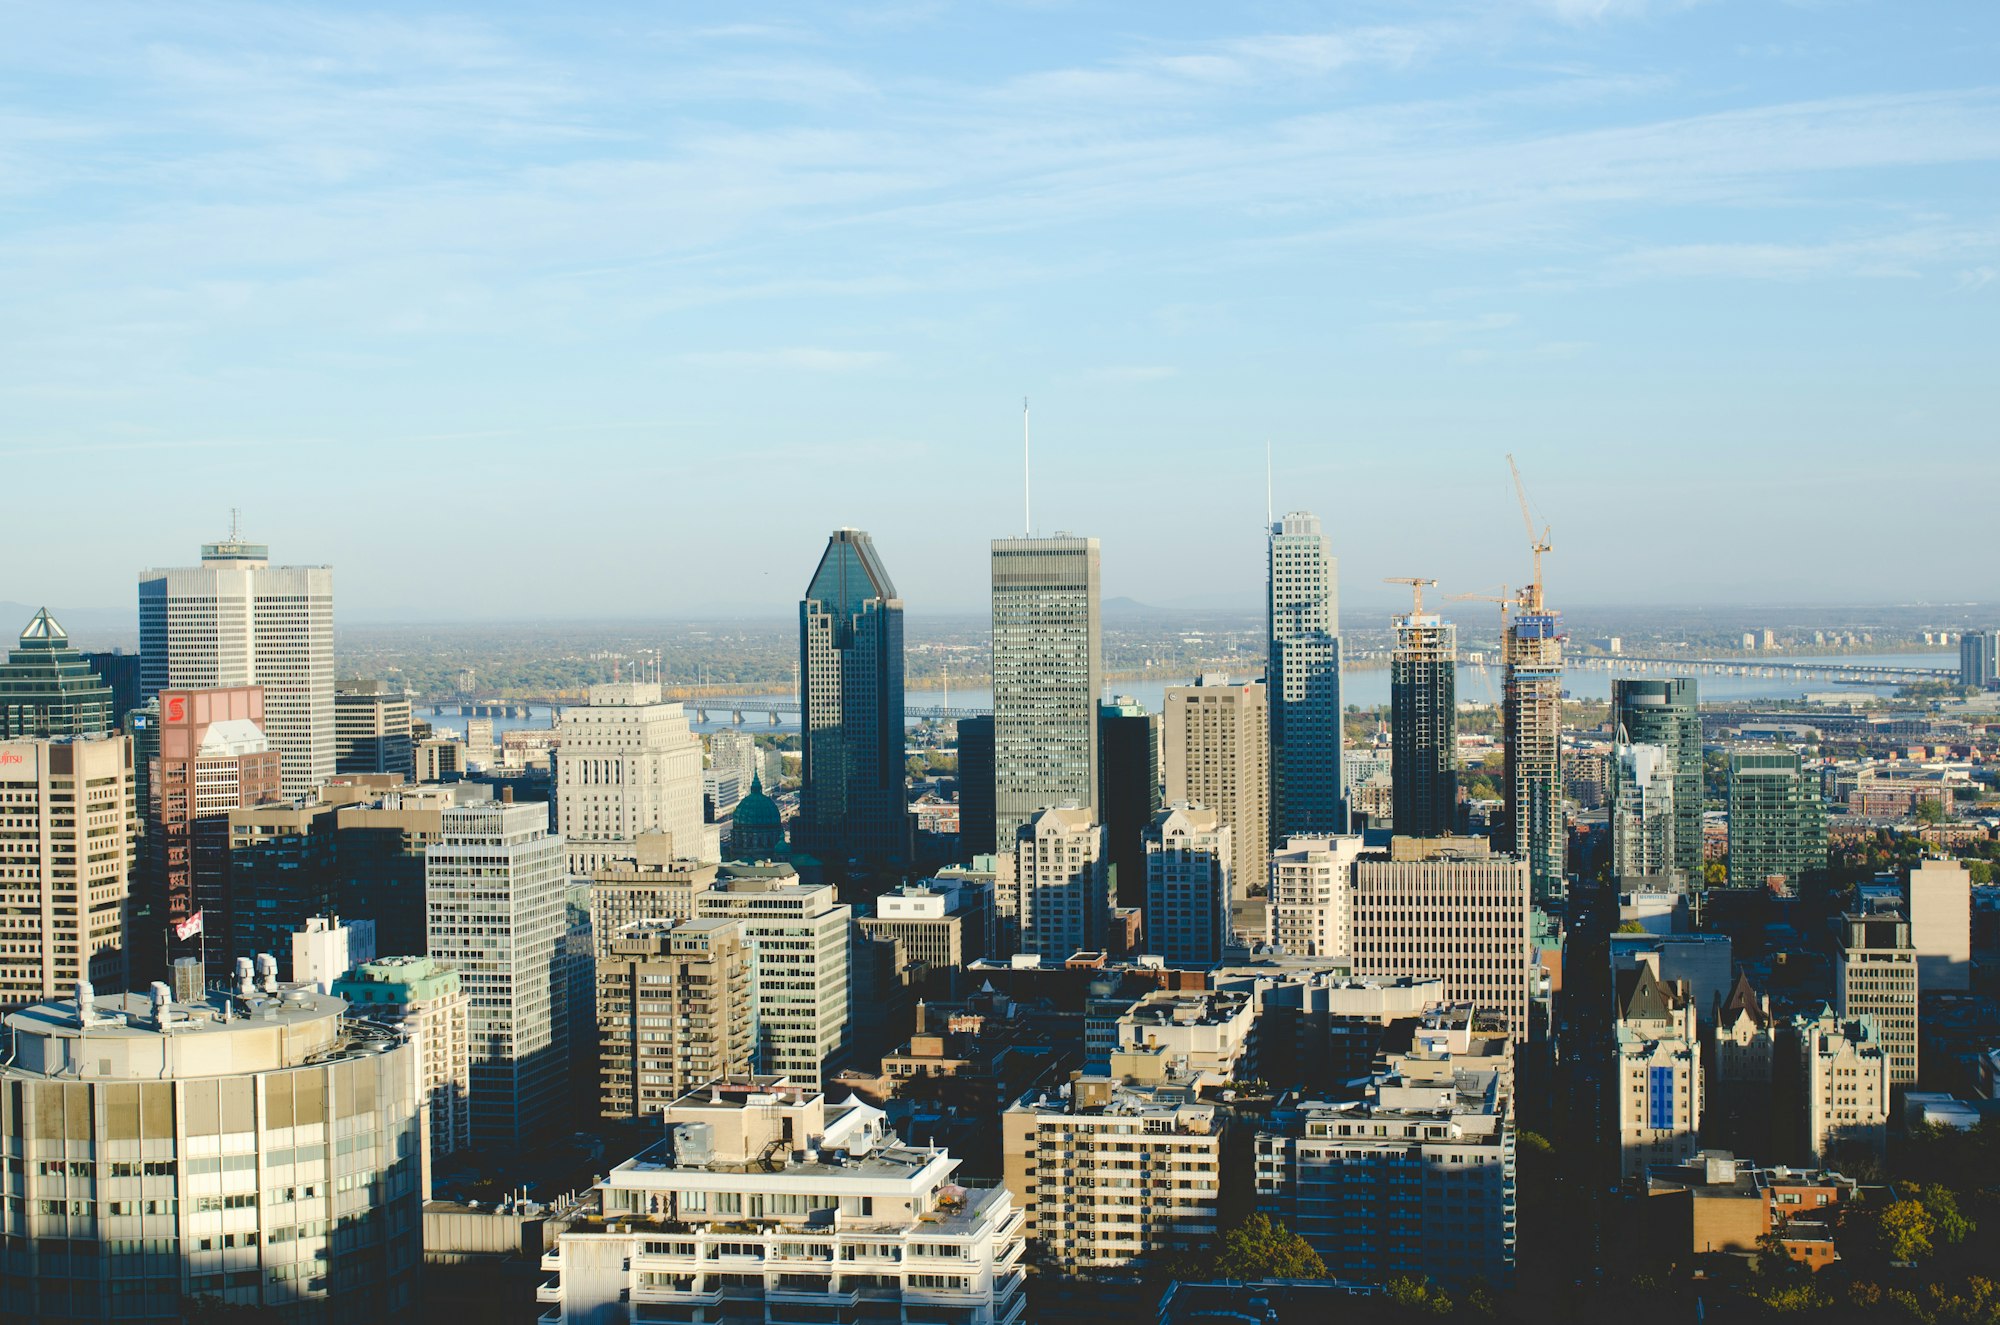 Downtown Montreal skyline